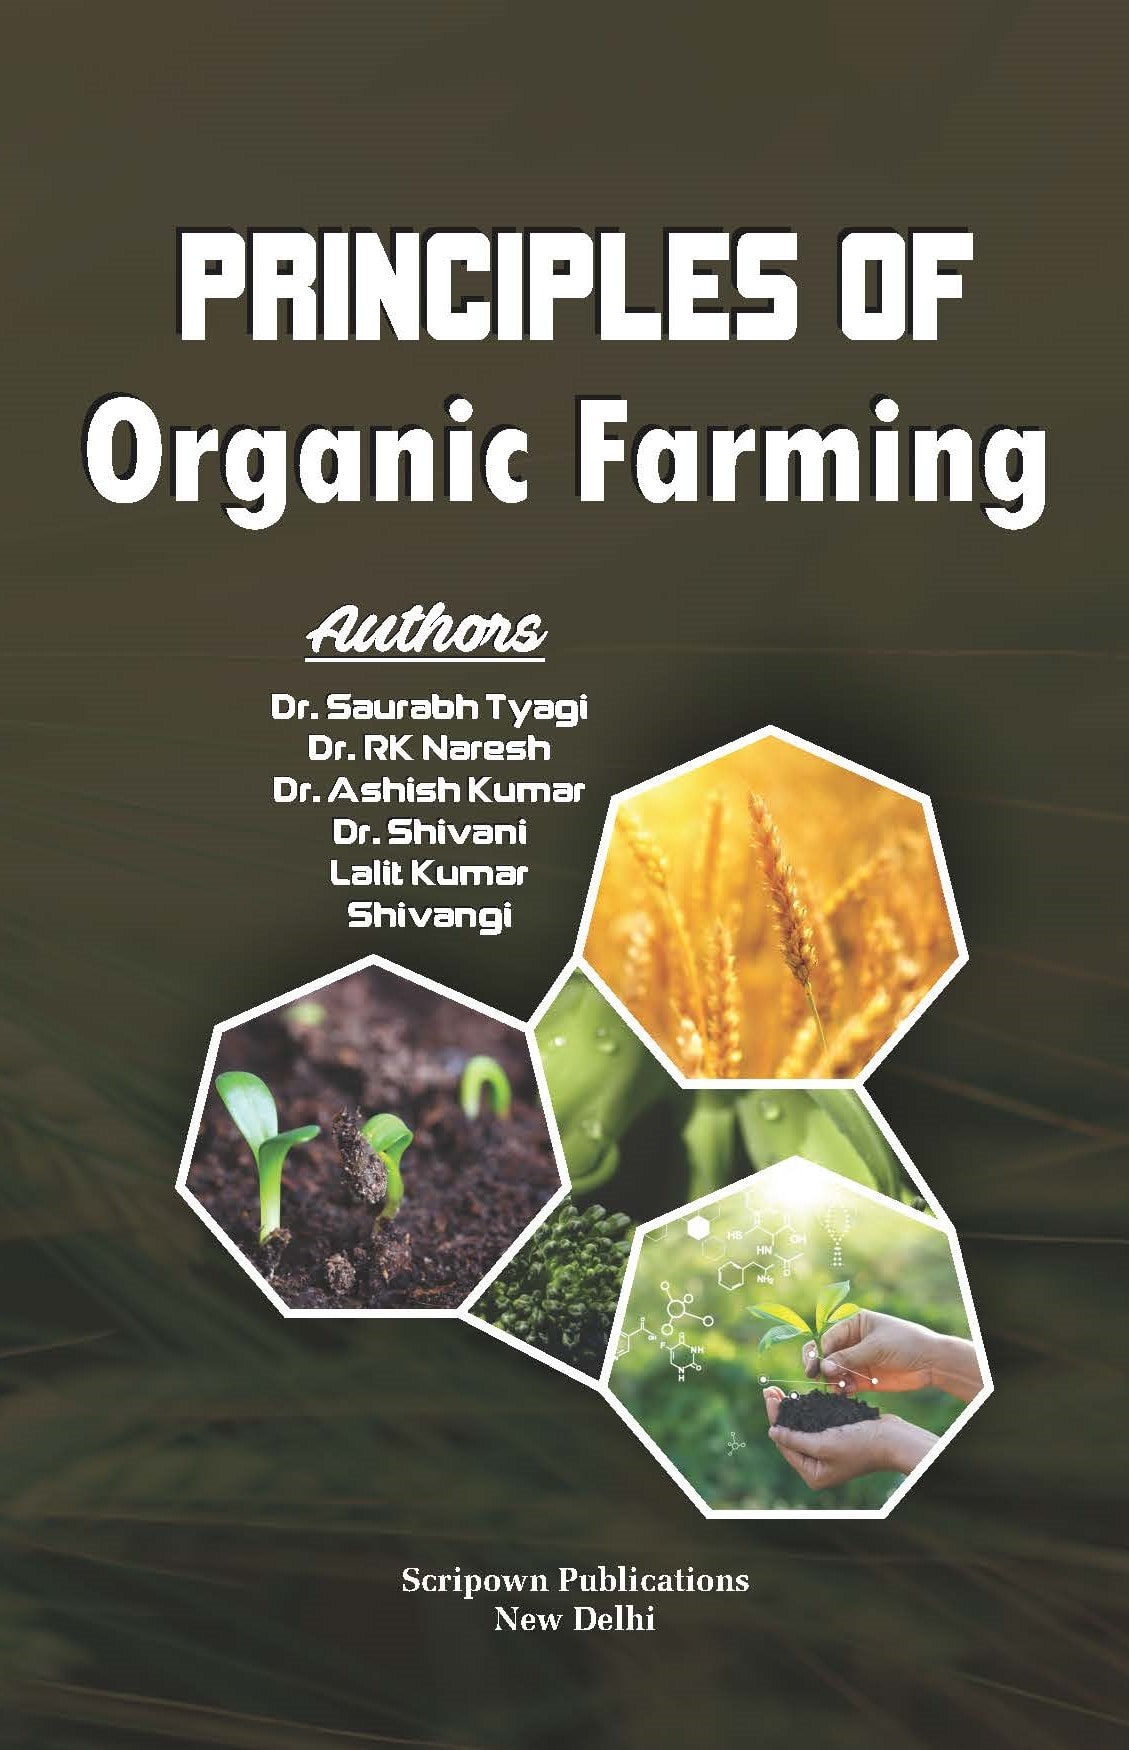 organic farming research articles